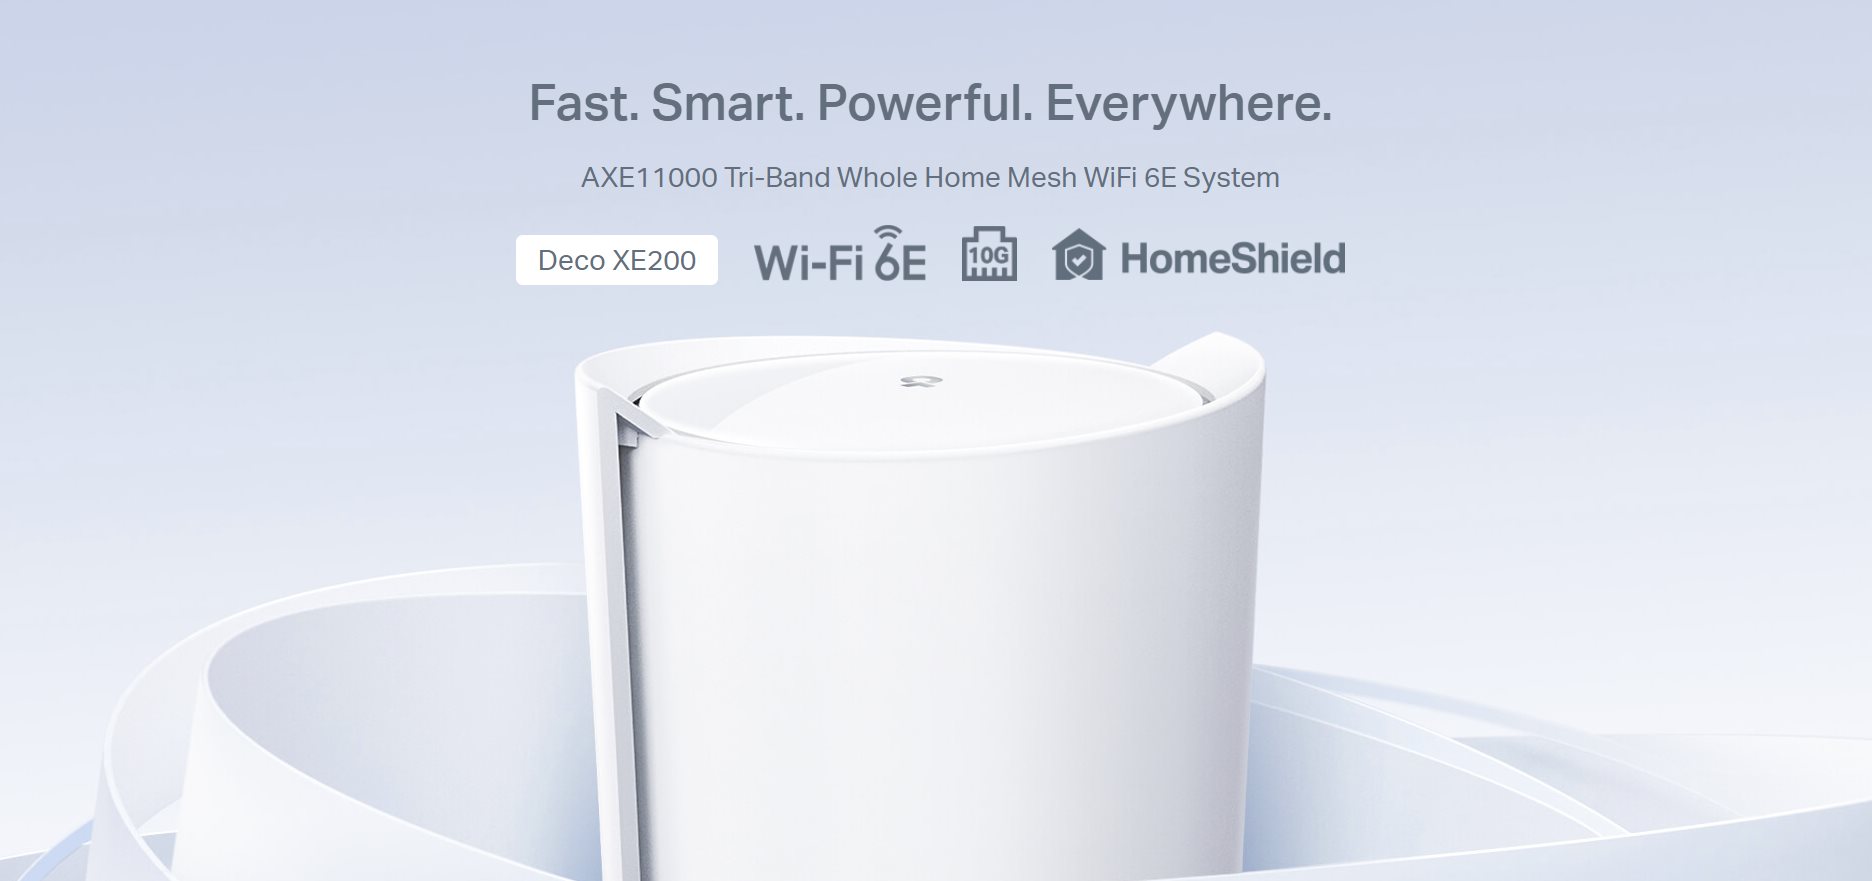 The Ultimate 10G Network — Revolutionary WiFi 7 Mesh